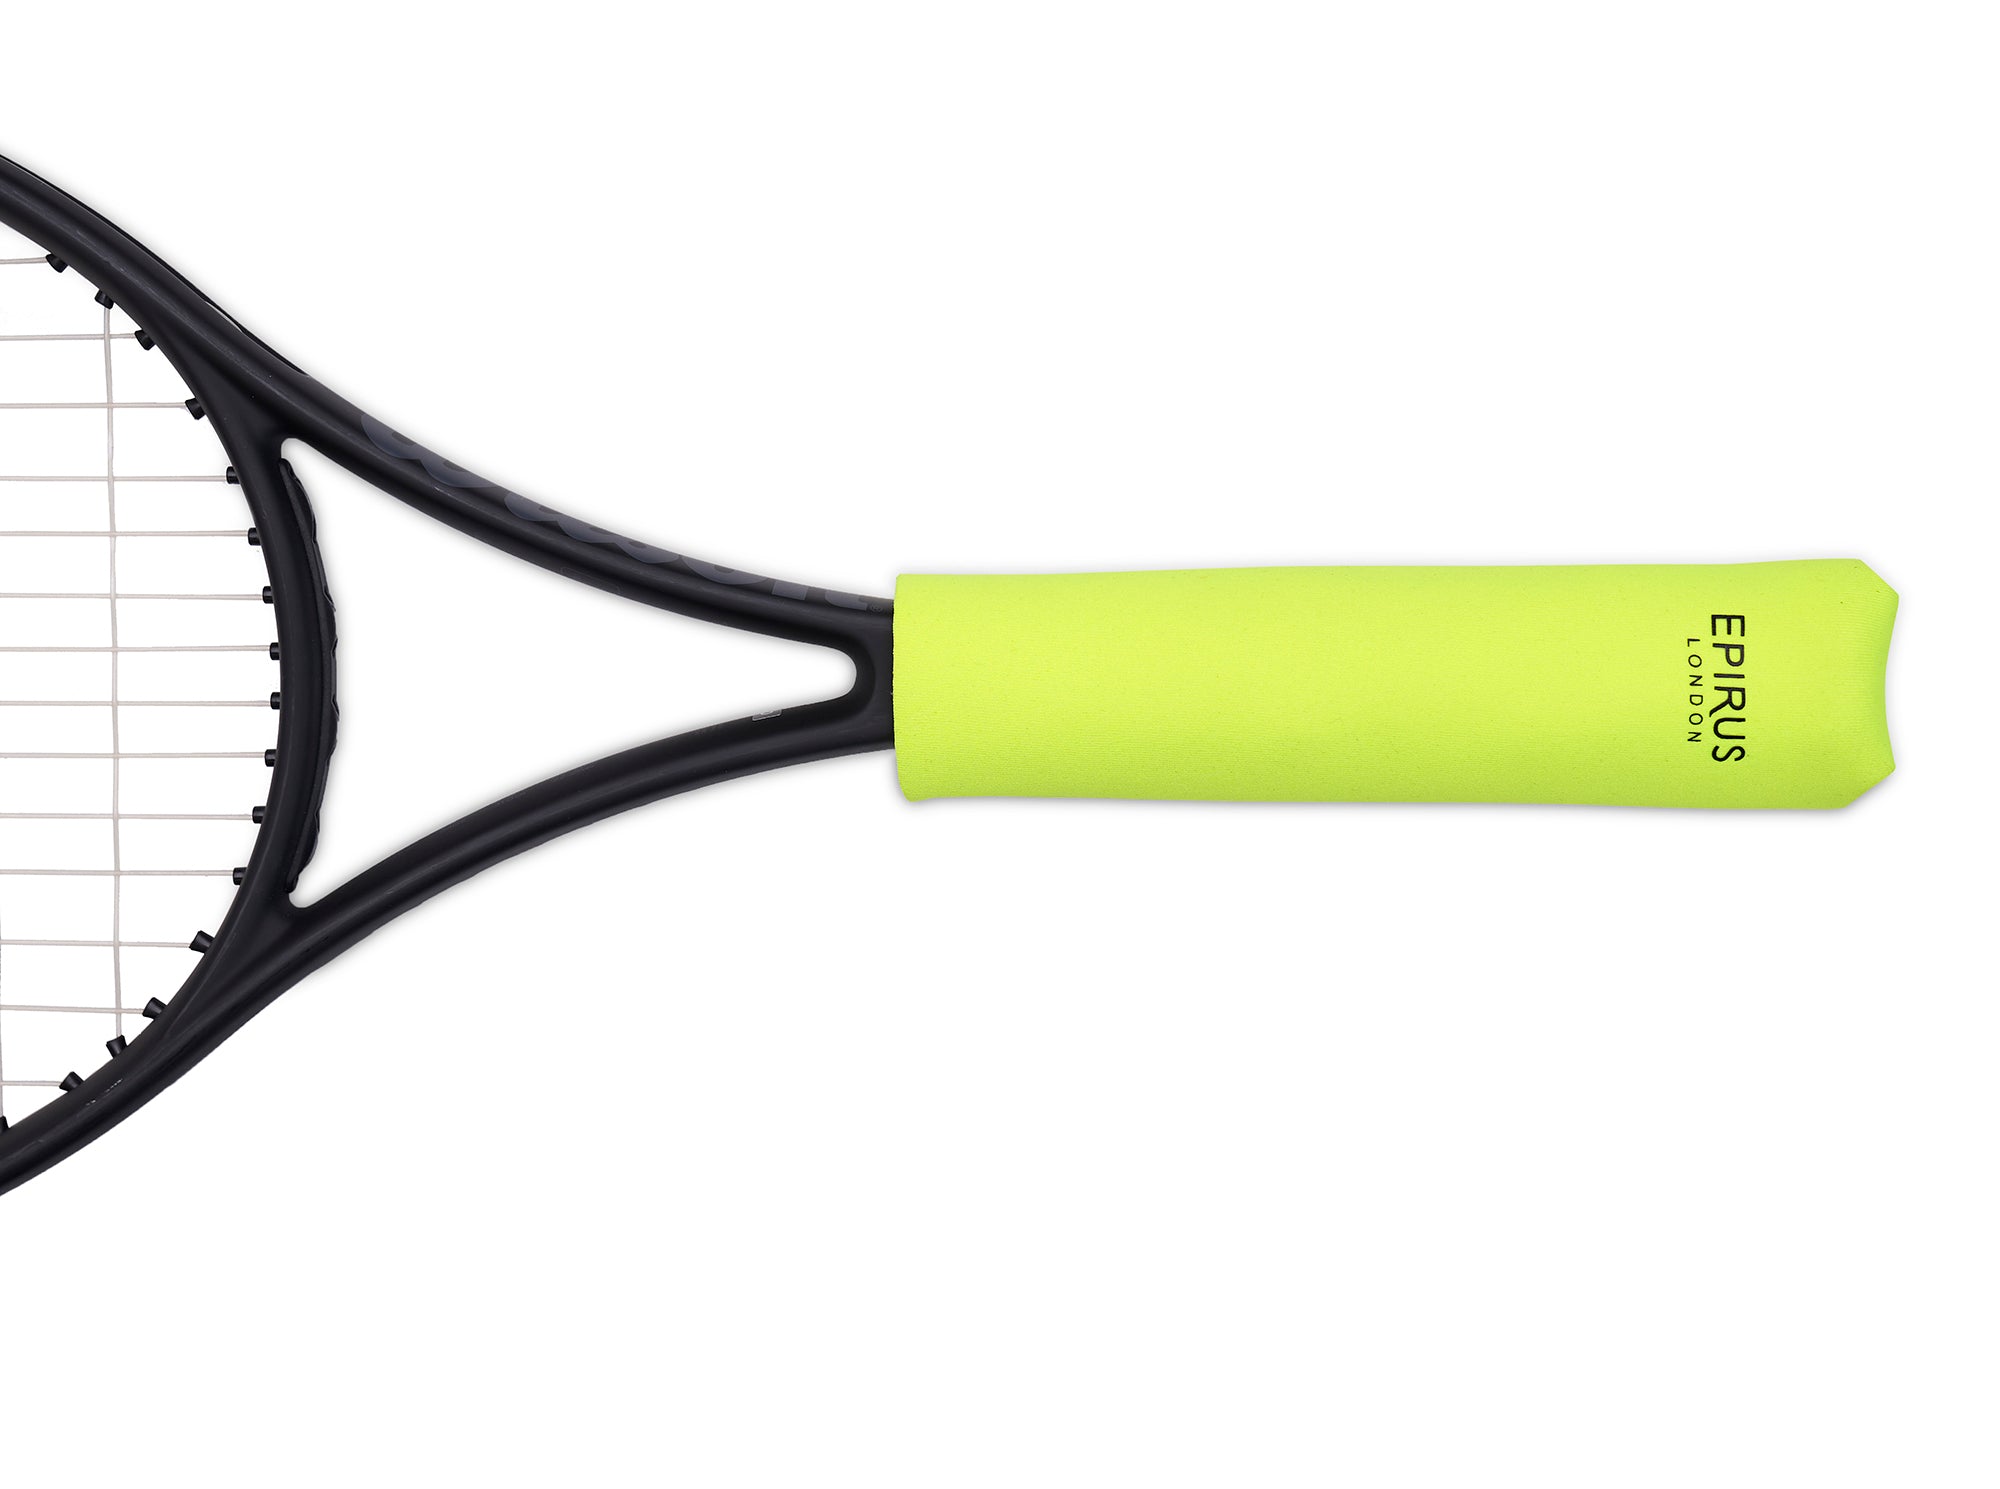 Postcode Eik eenzaam Neoprene Grip Covers | Keep Your Tennis Racket Handles Dry - Epirus London